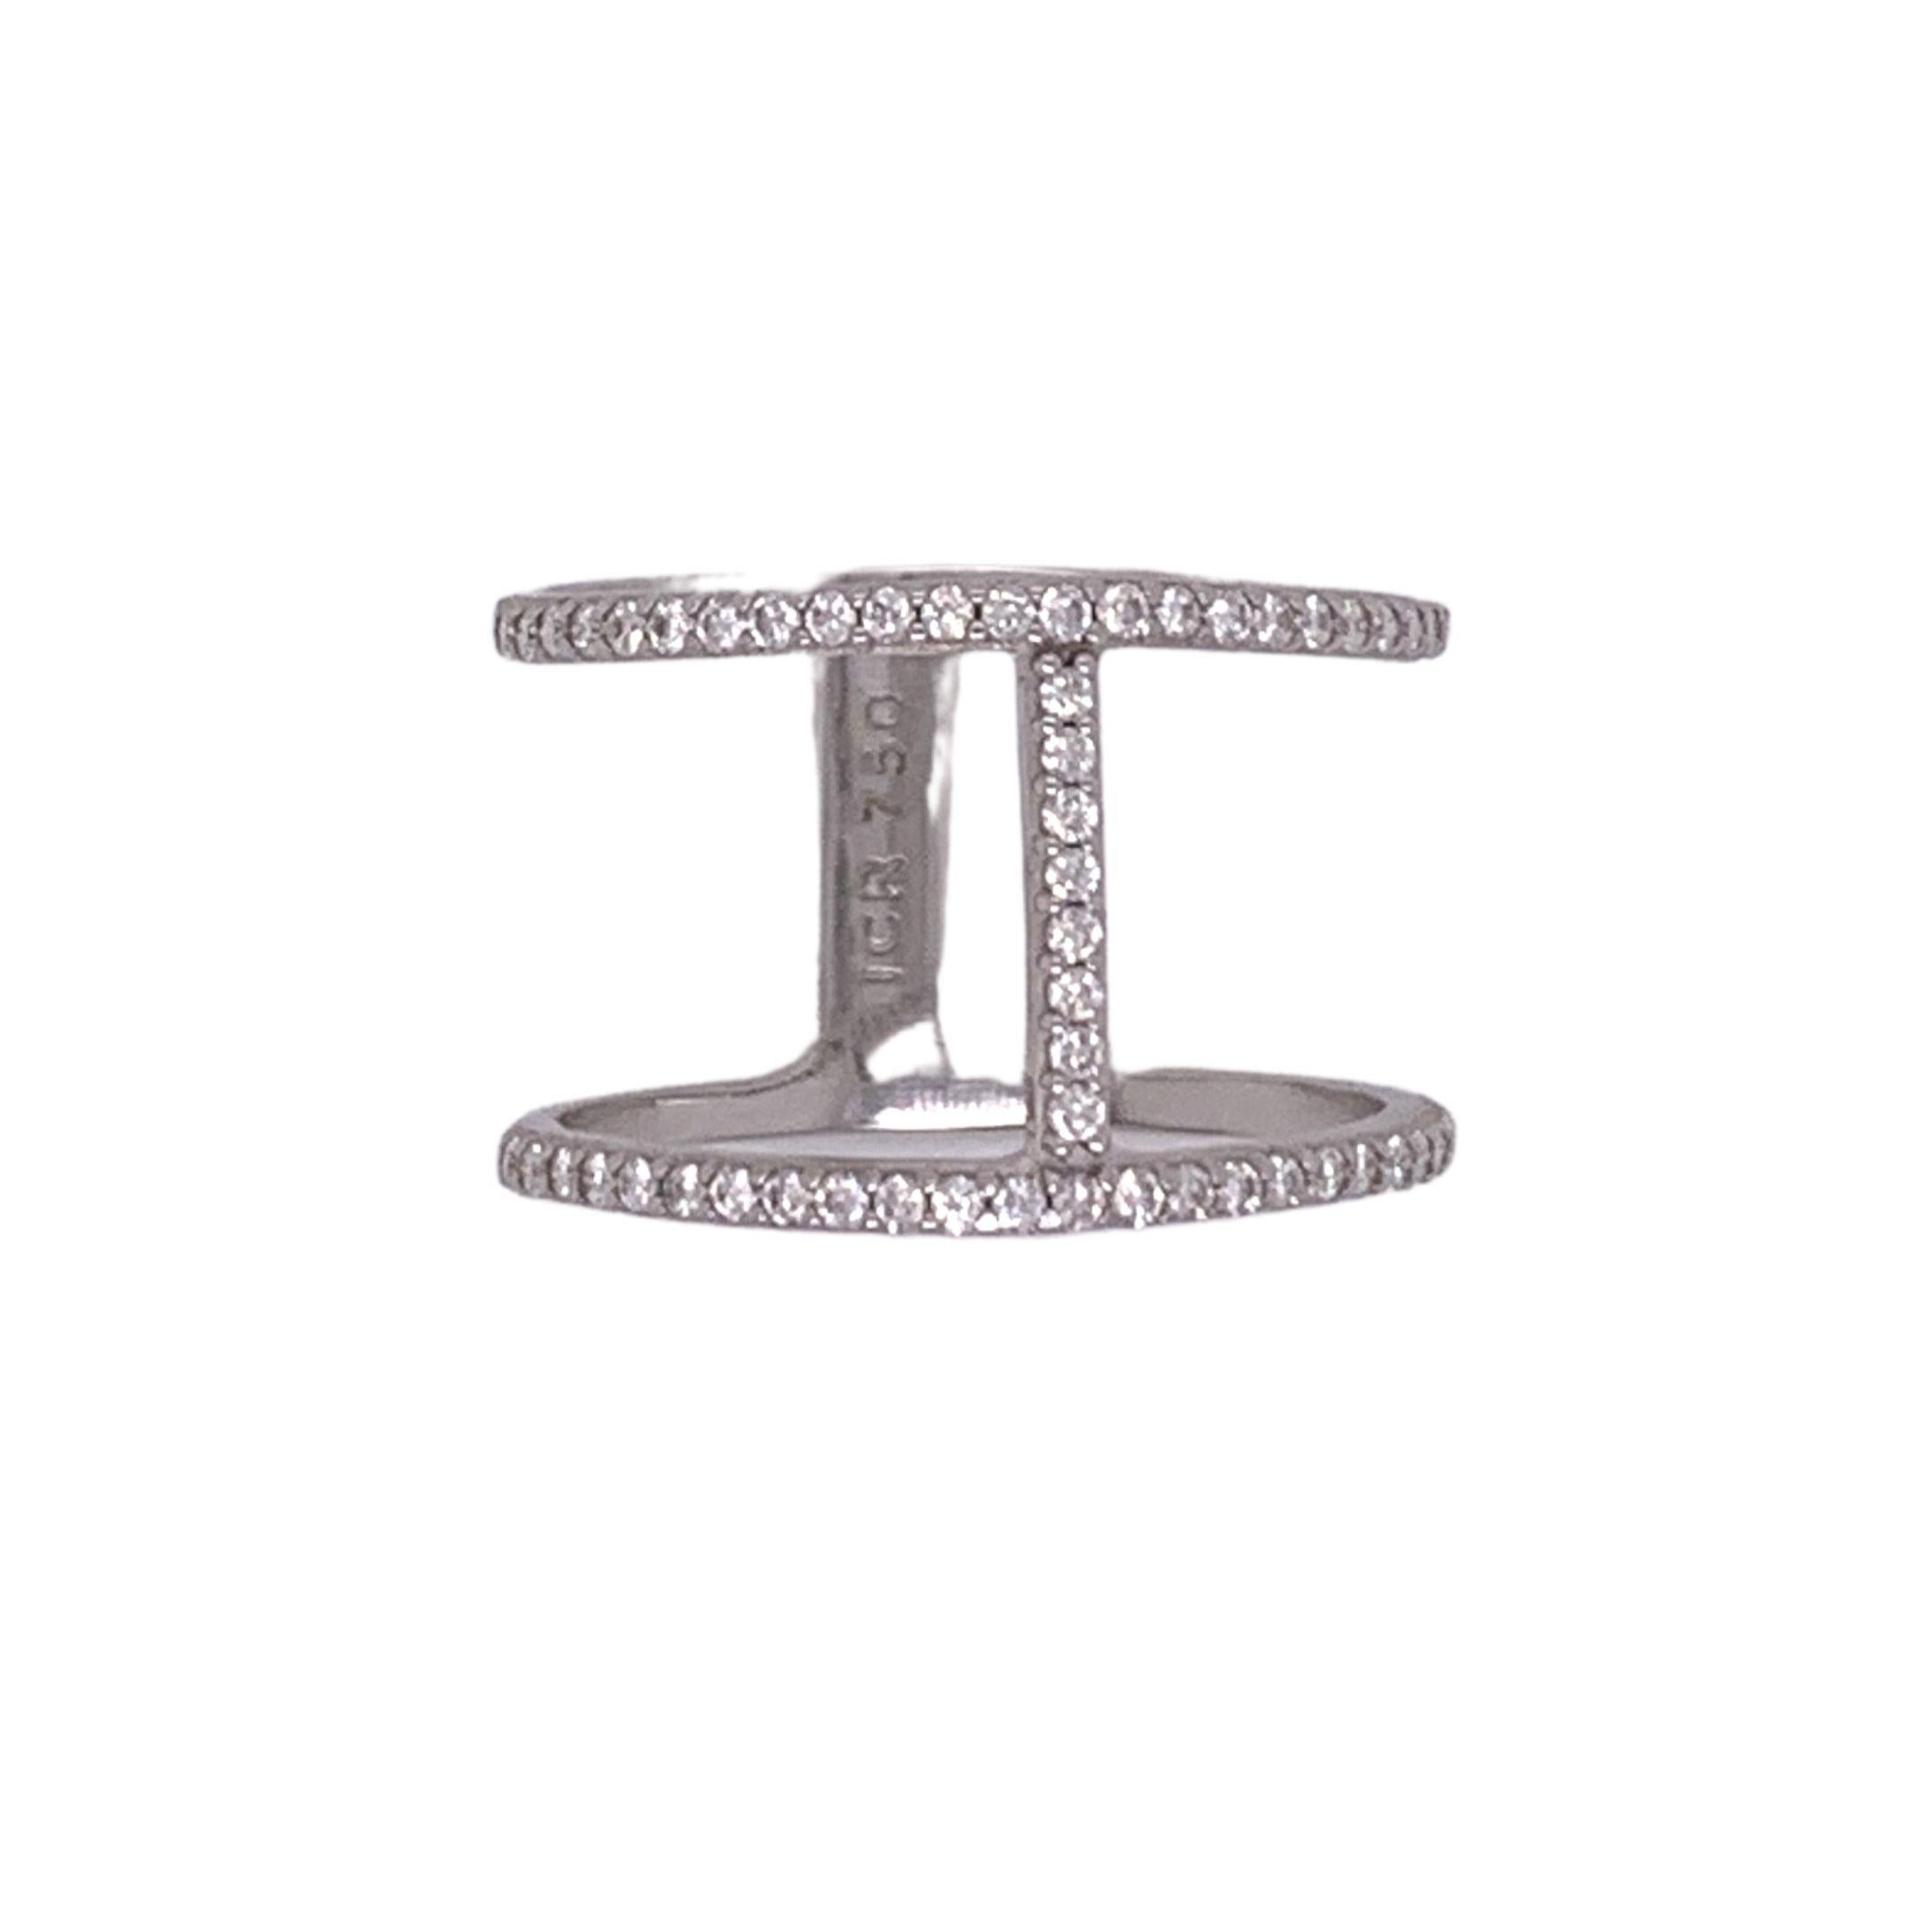 Fashion diamond ring made with real/natural diamonds. Total Diamond Weight: 0.29 Carats, Diamond Quantity: 58 Brilliant Cut Diamonds. Set on 18 karat white gold. Ring size 5.5.